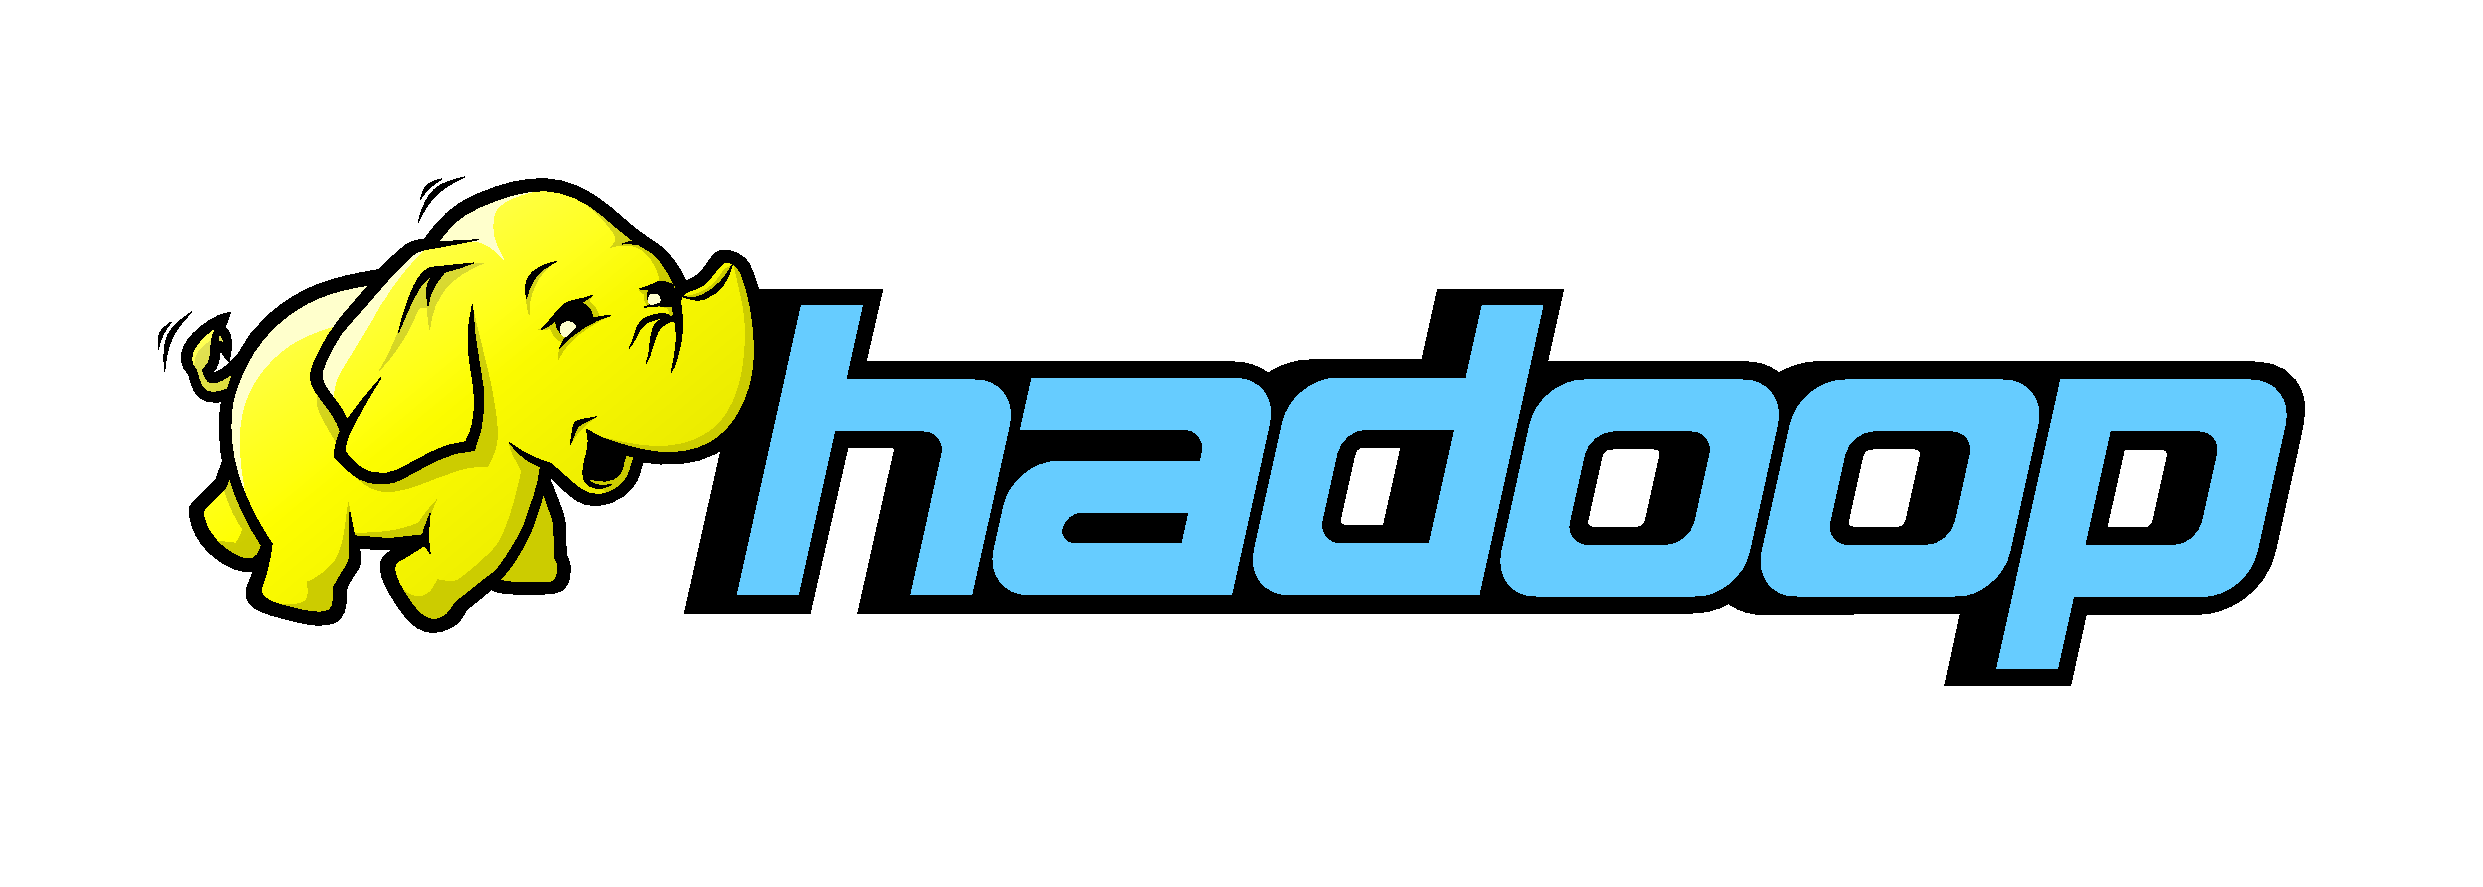 Hadoop Header Image